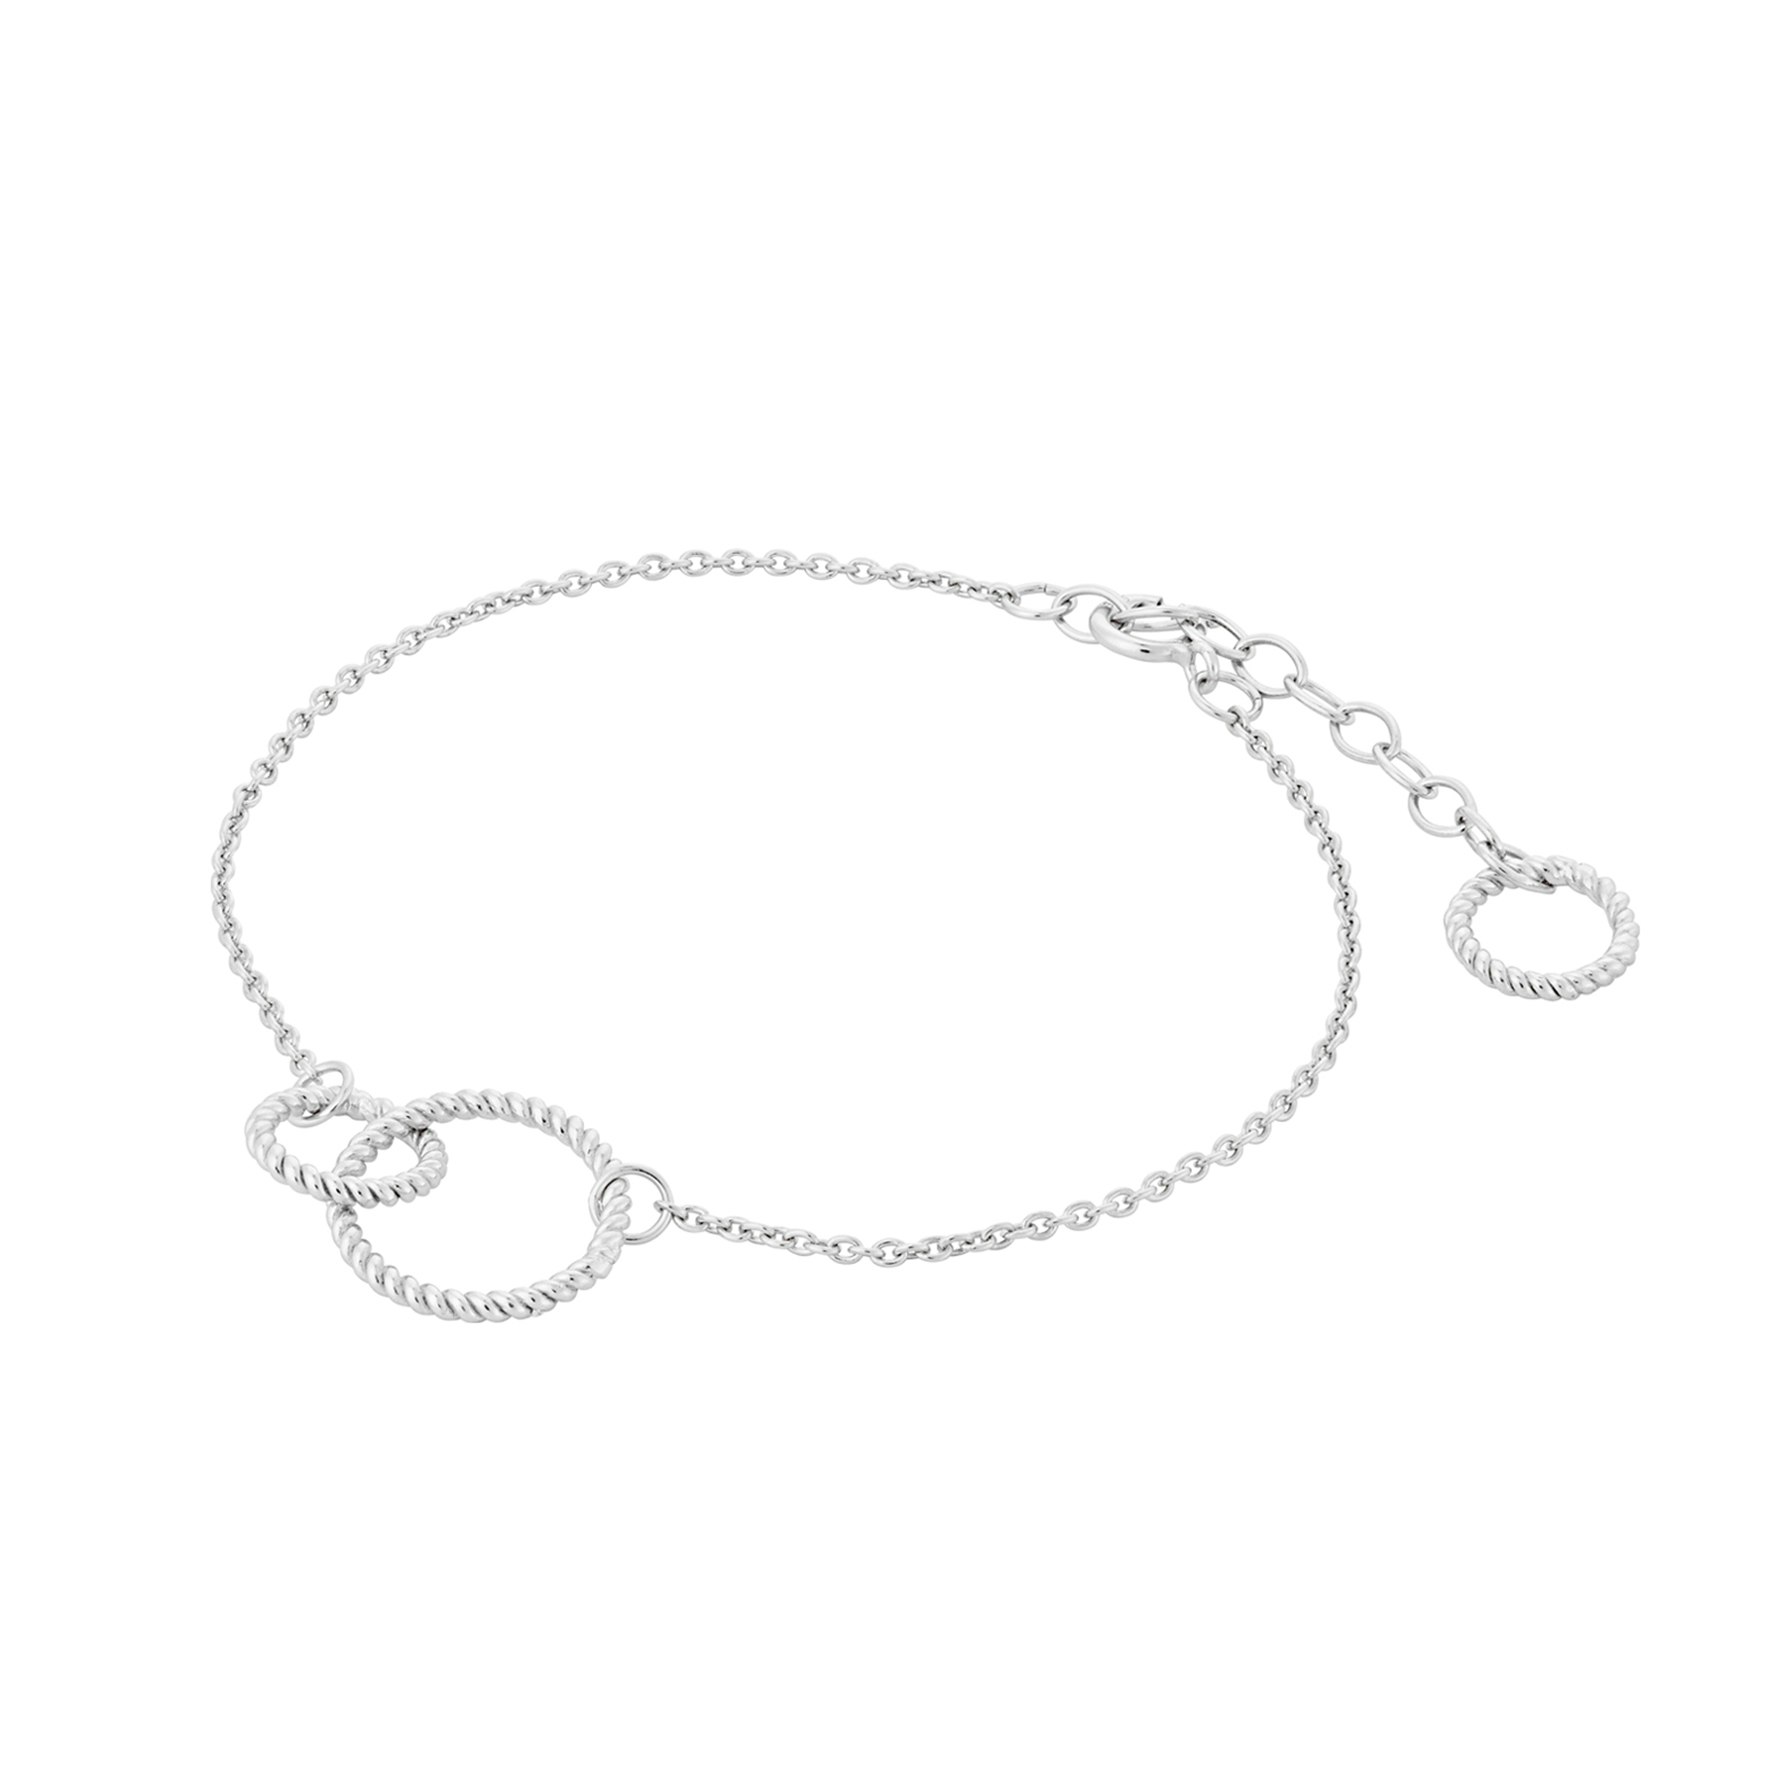 Double Twisted Bracelet from Pernille Corydon in Silver Sterling 925